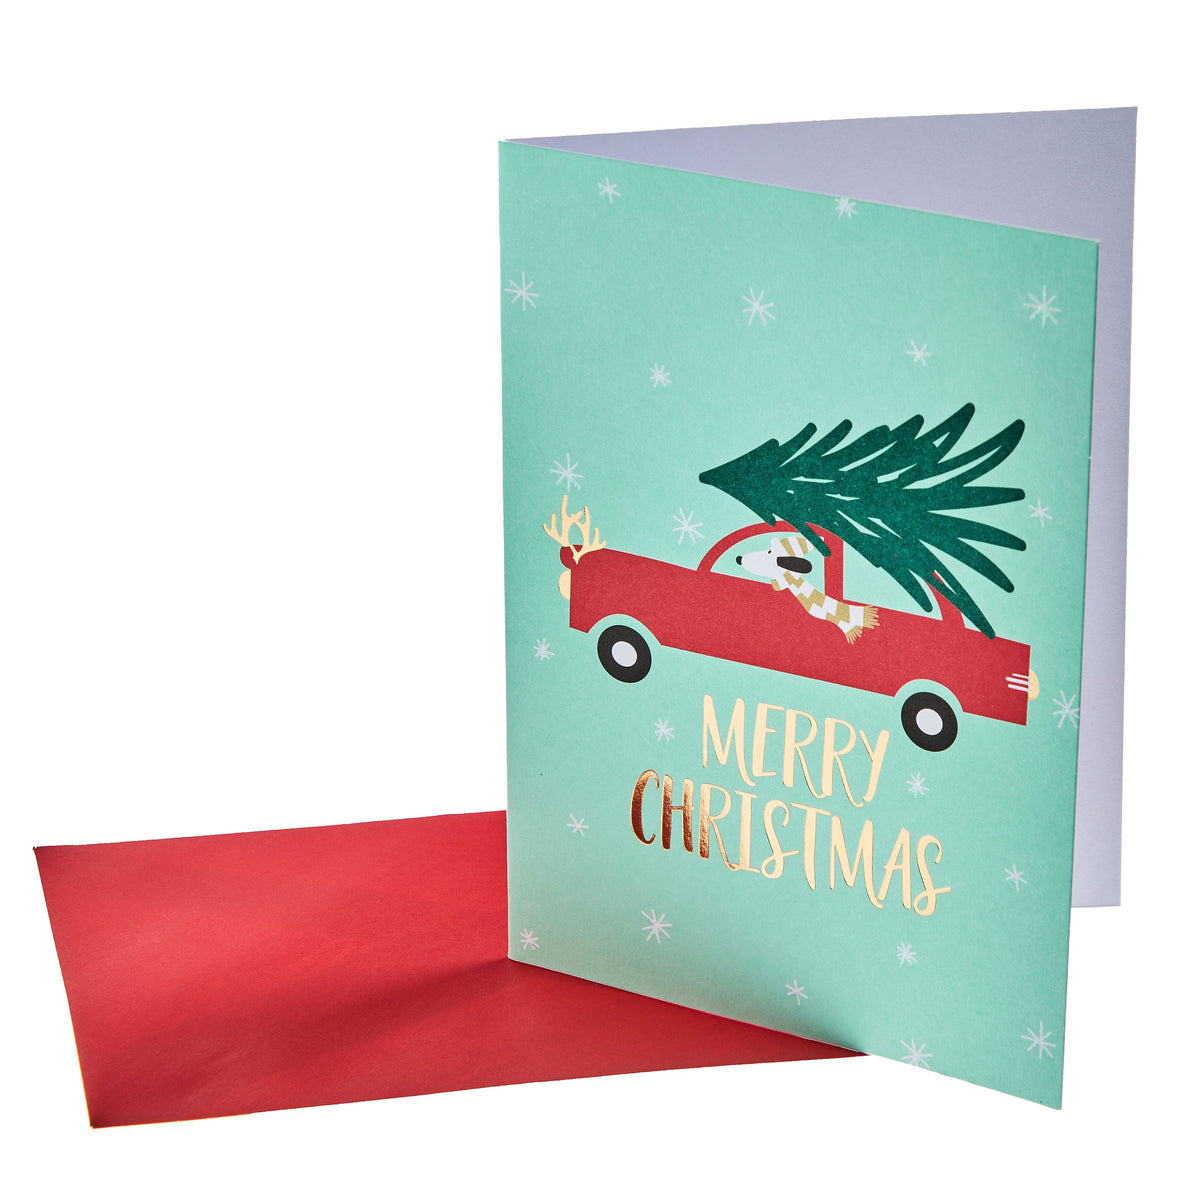 Merry Christmas Cards - Set of 20 Gartner Studios Cards - Christmas